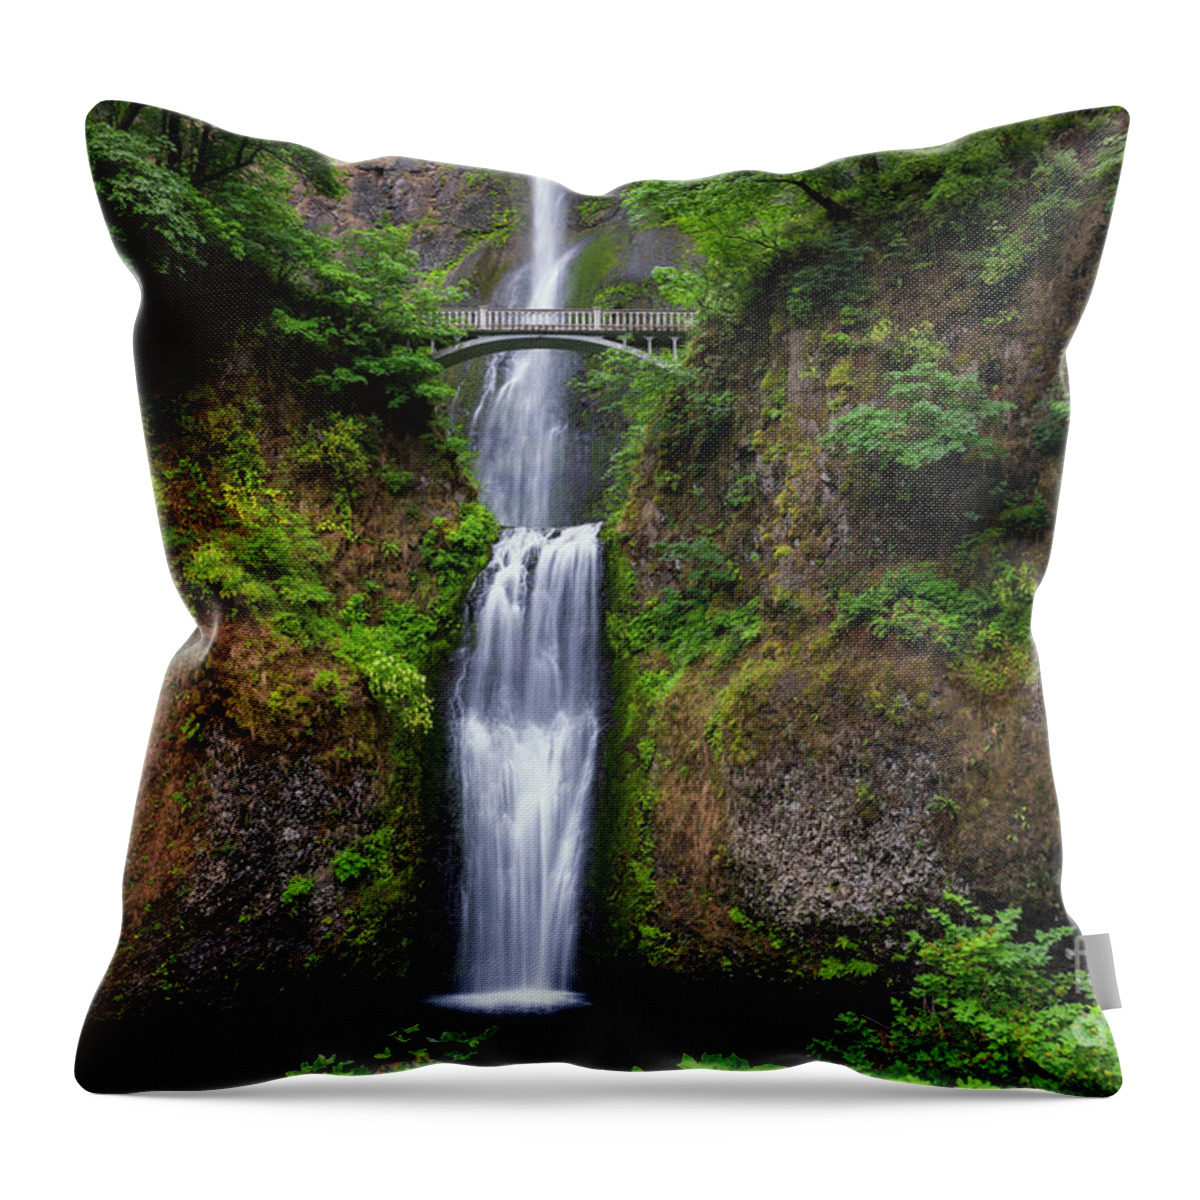 Multnomah Falls Throw Pillow featuring the photograph Beautiful Multnomah Falls by Michael Ver Sprill